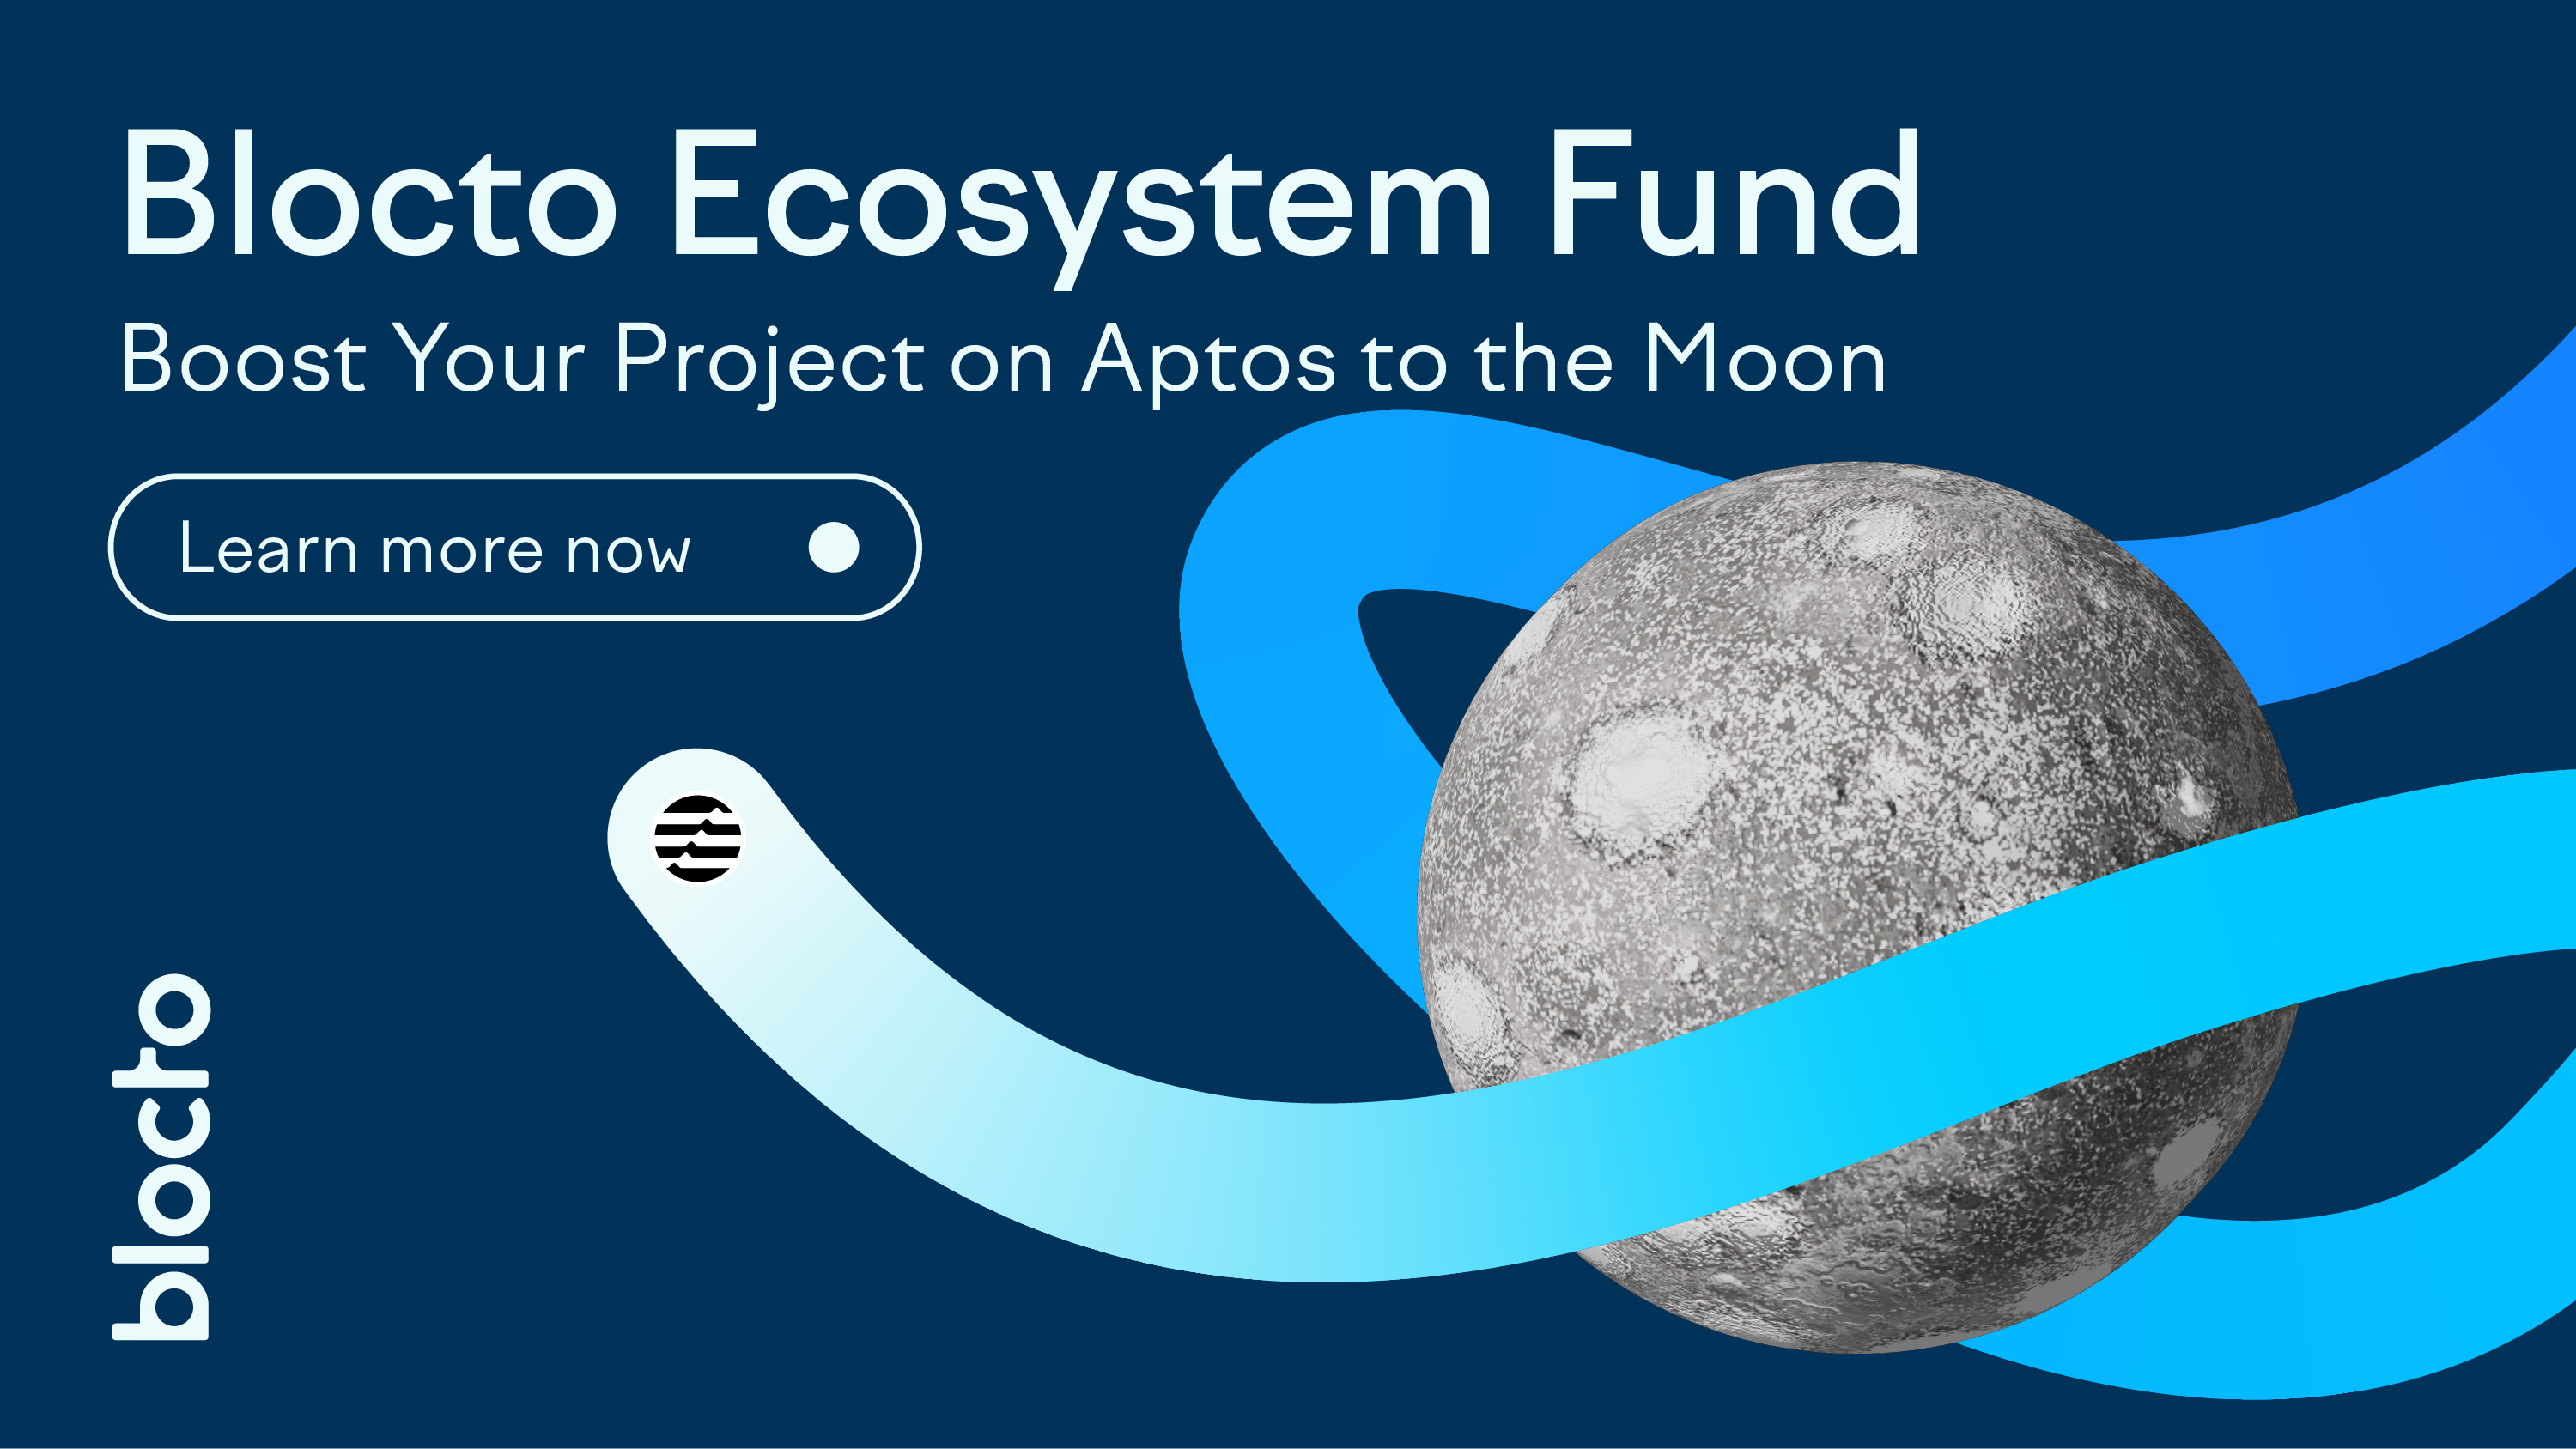 Blocto ecosystem fund to support Aptos